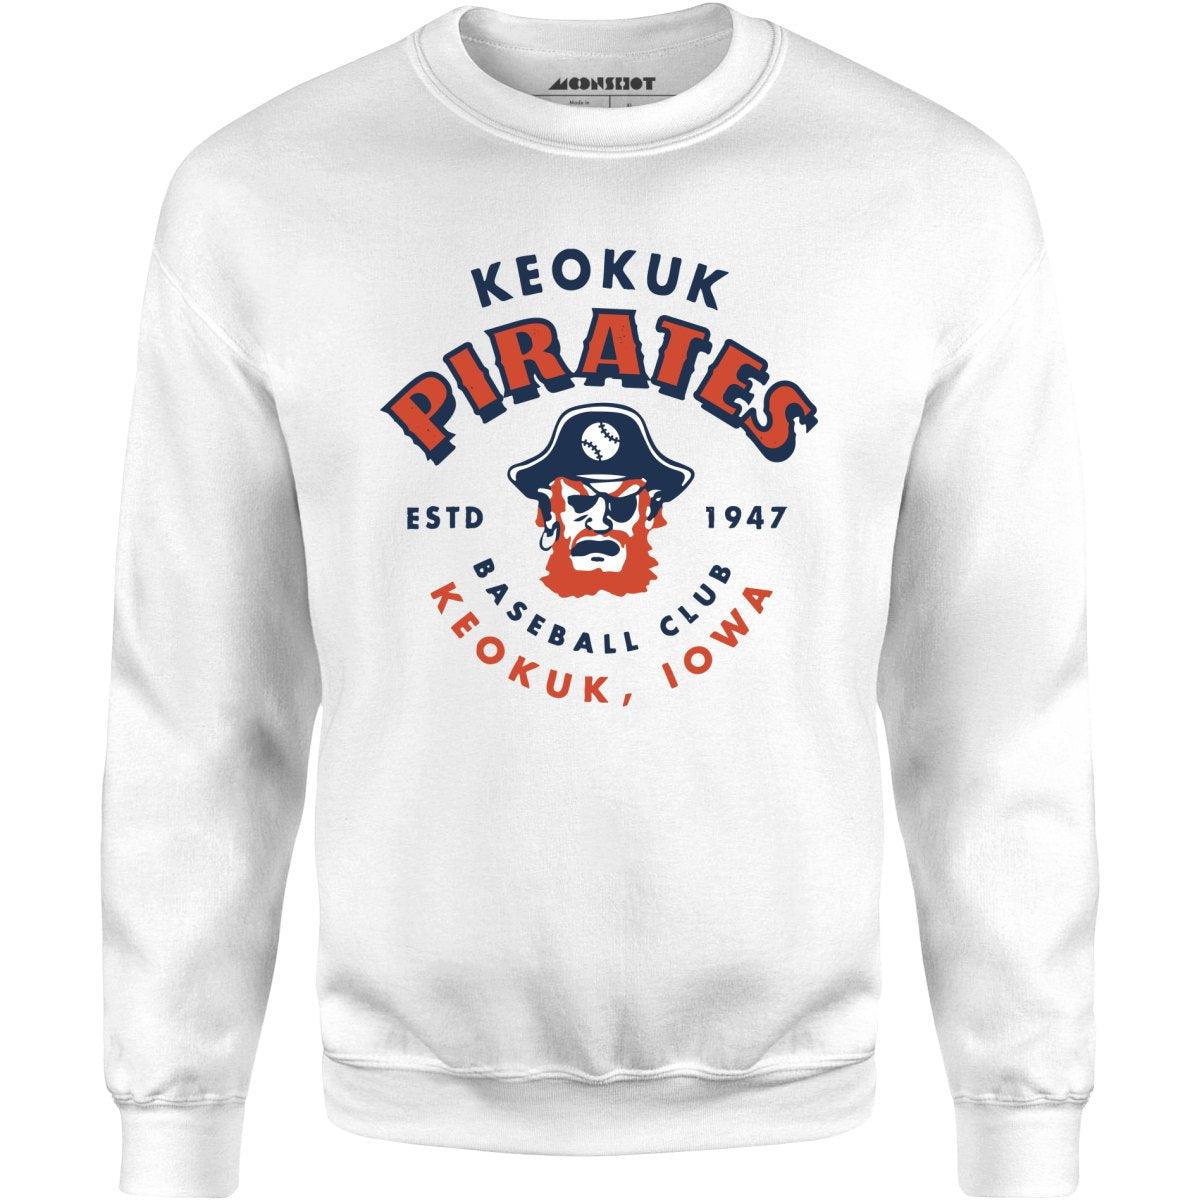 Keokuk Pirates - Iowa - Vintage Defunct Baseball Teams - Unisex Sweatshirt